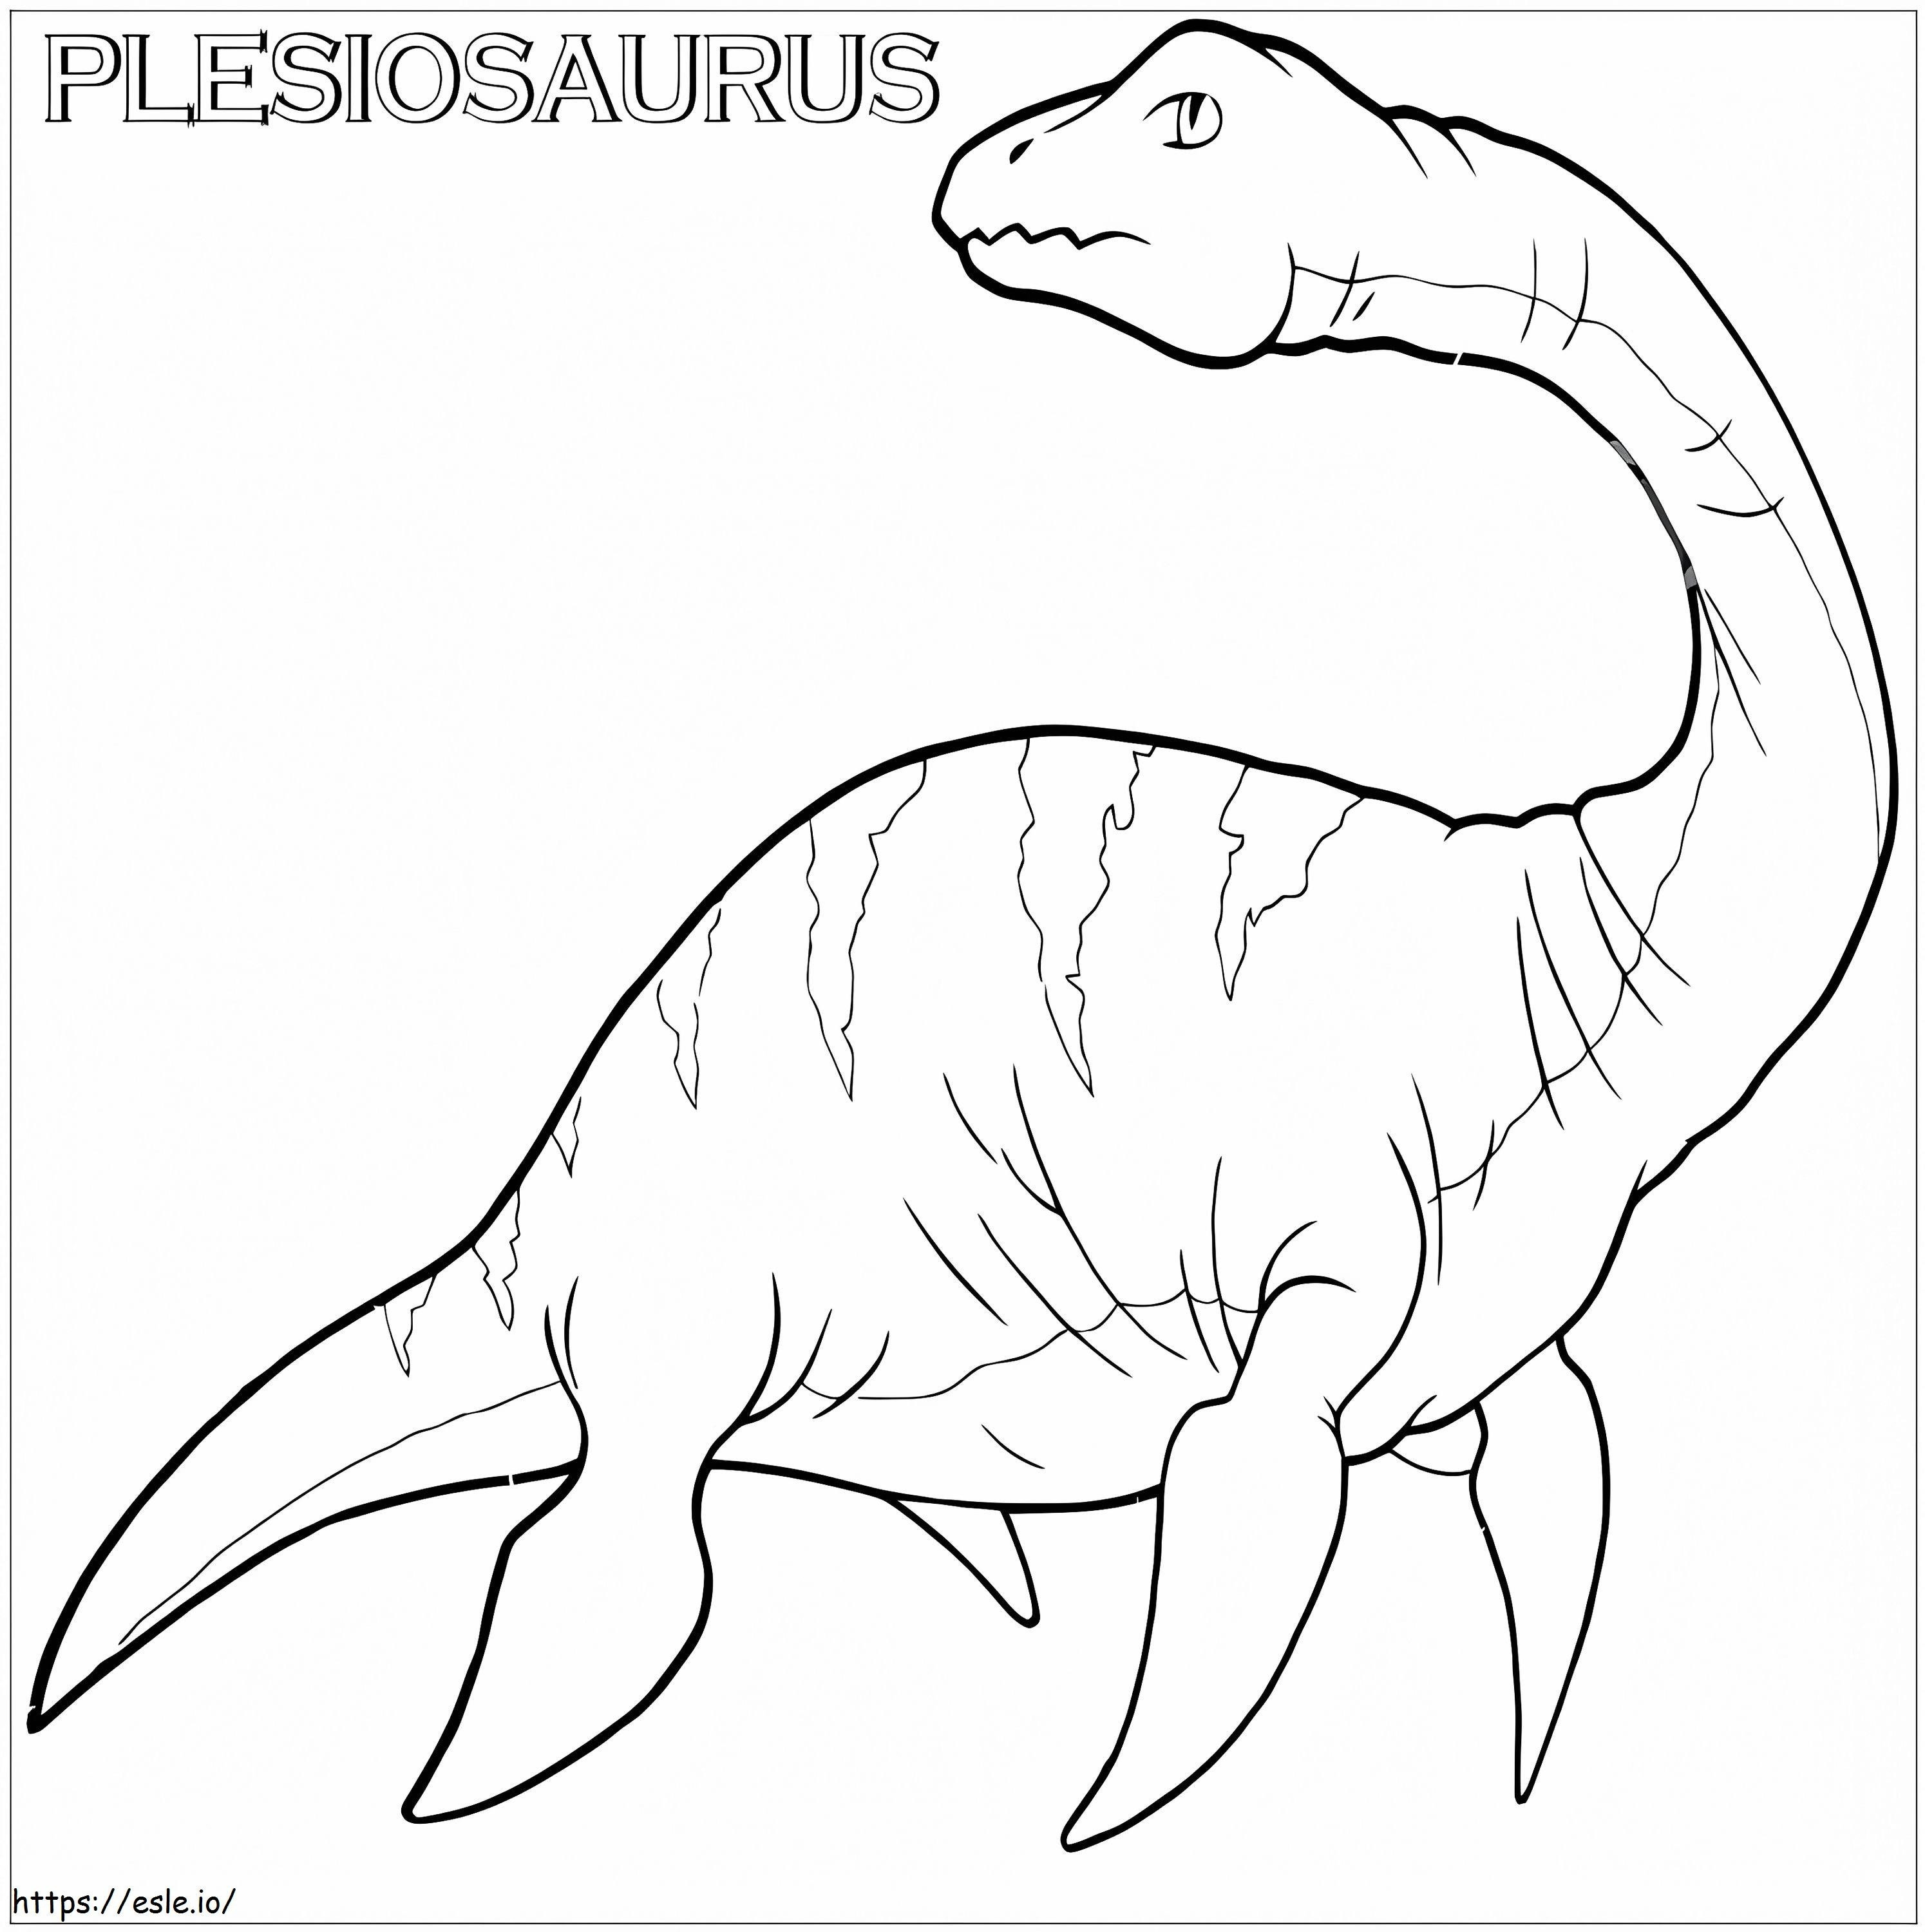 Plesiosaurus 3 ausmalbilder